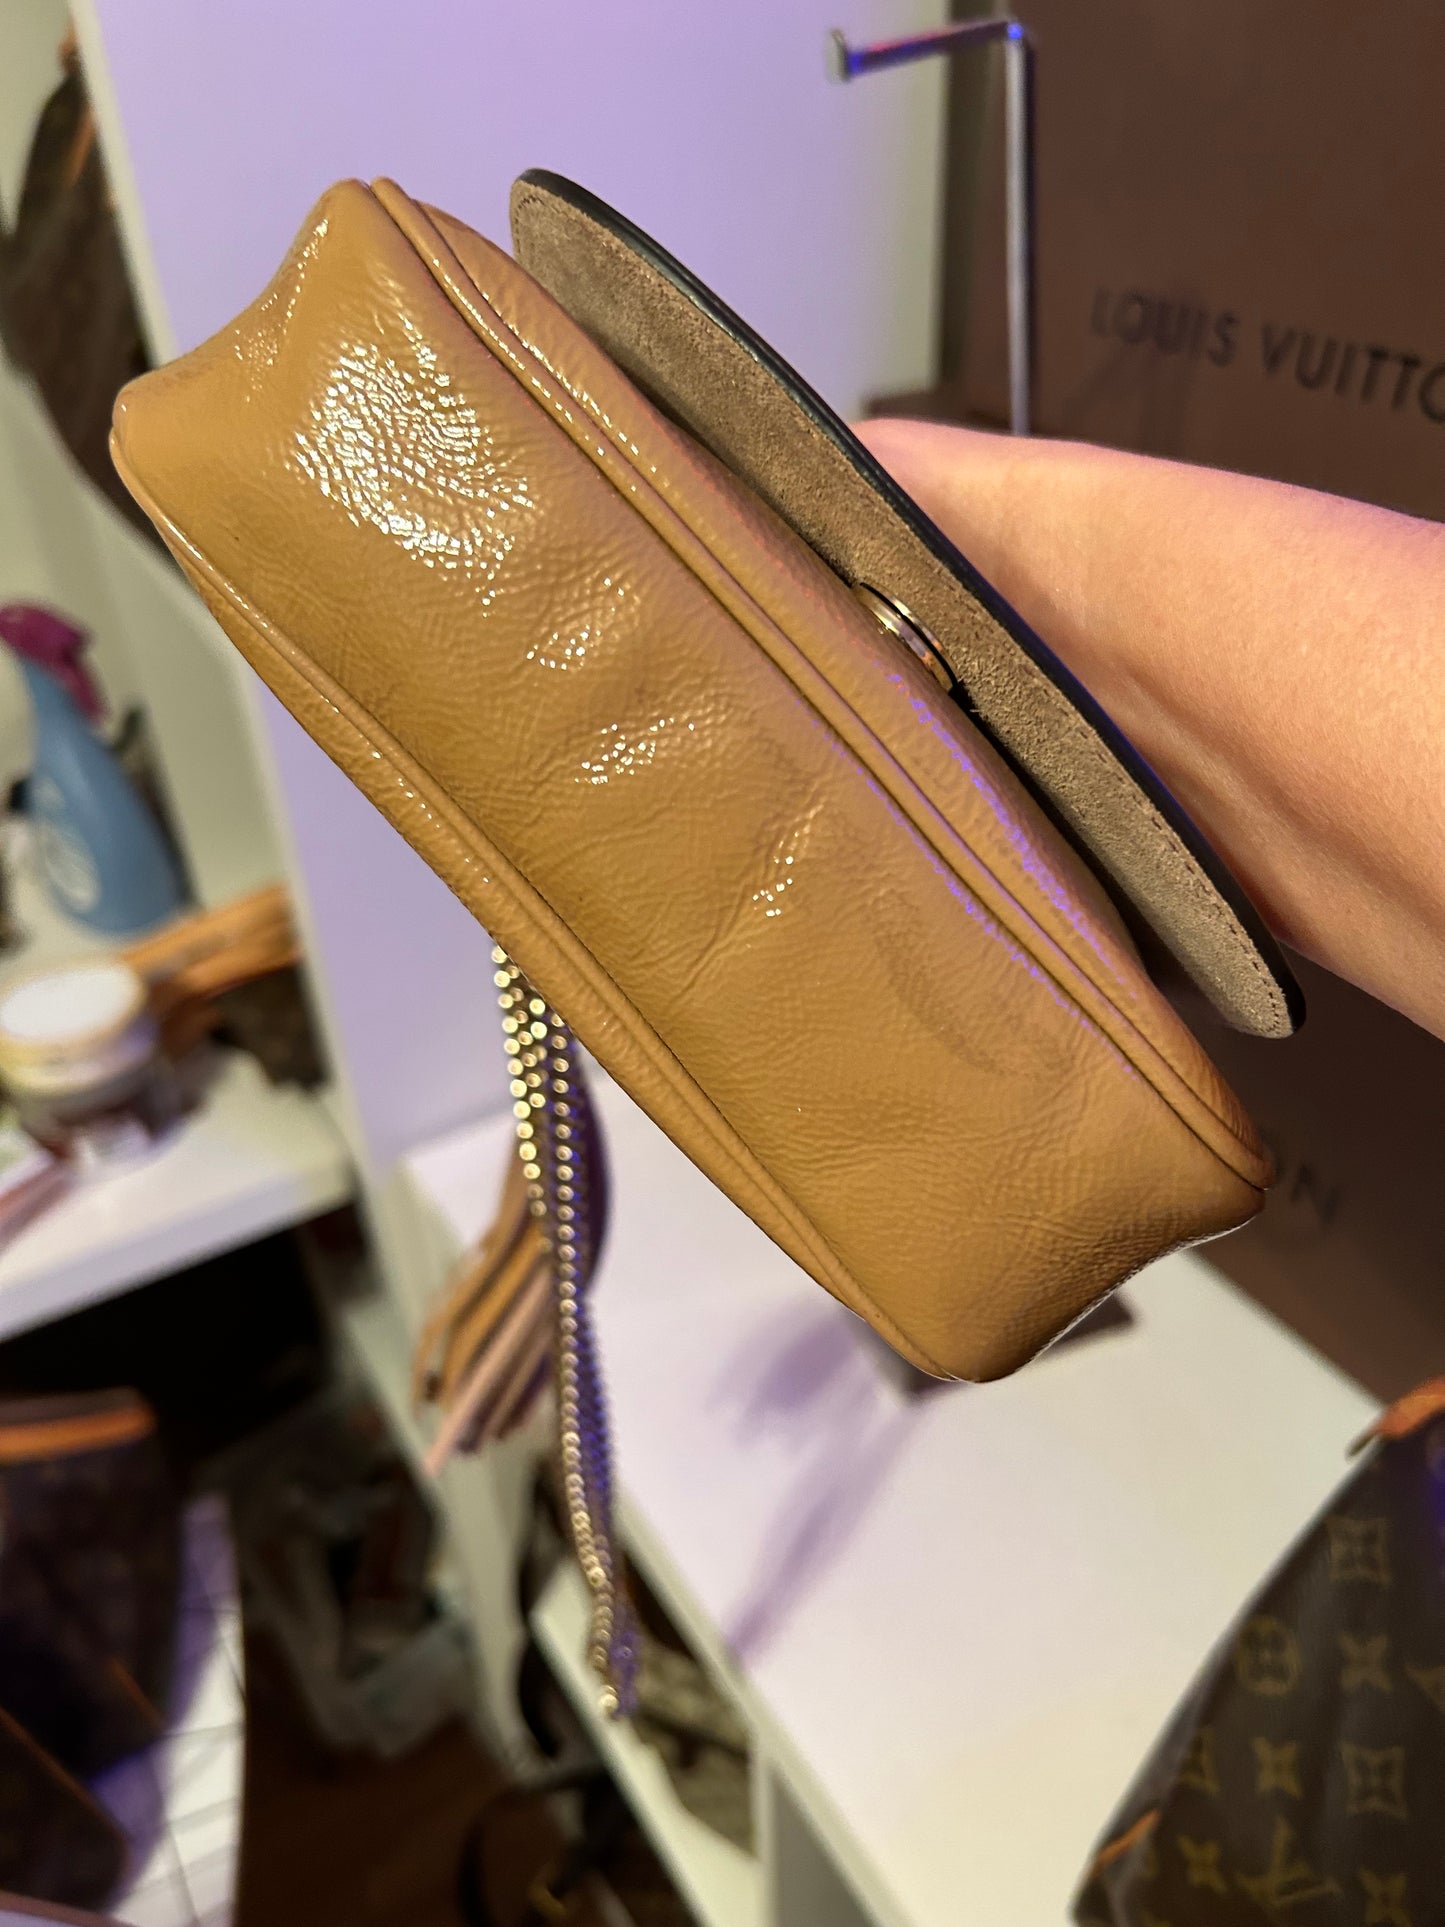 Gucci Soho Patent Leather Crossbody